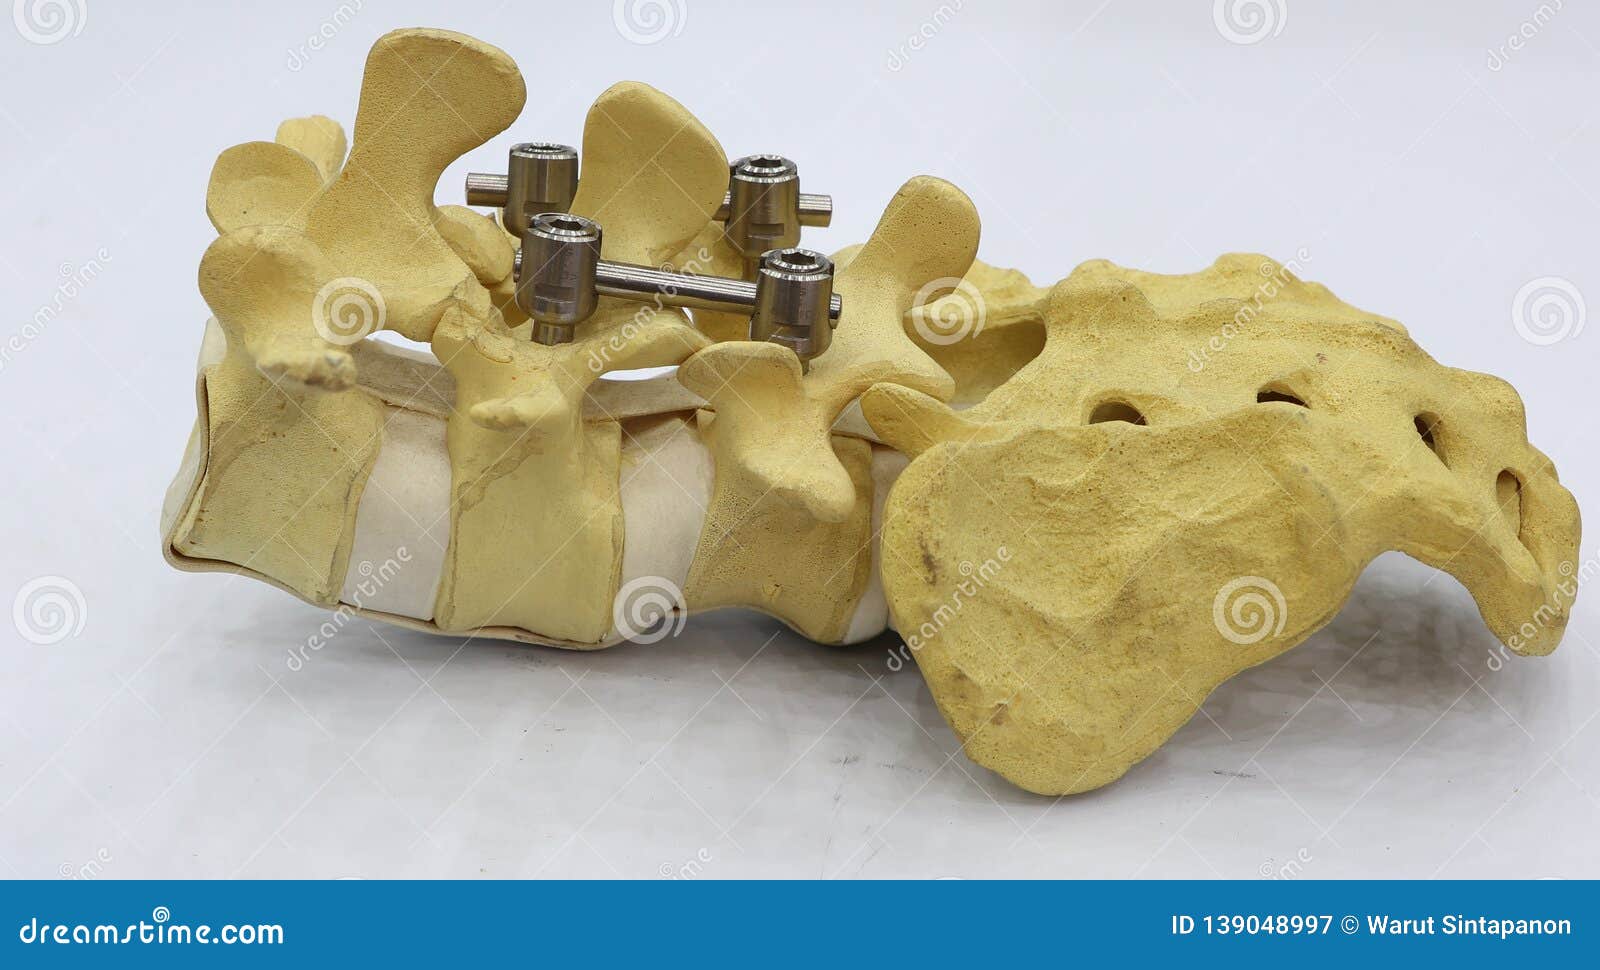 spinal fixation system - titanium bracket